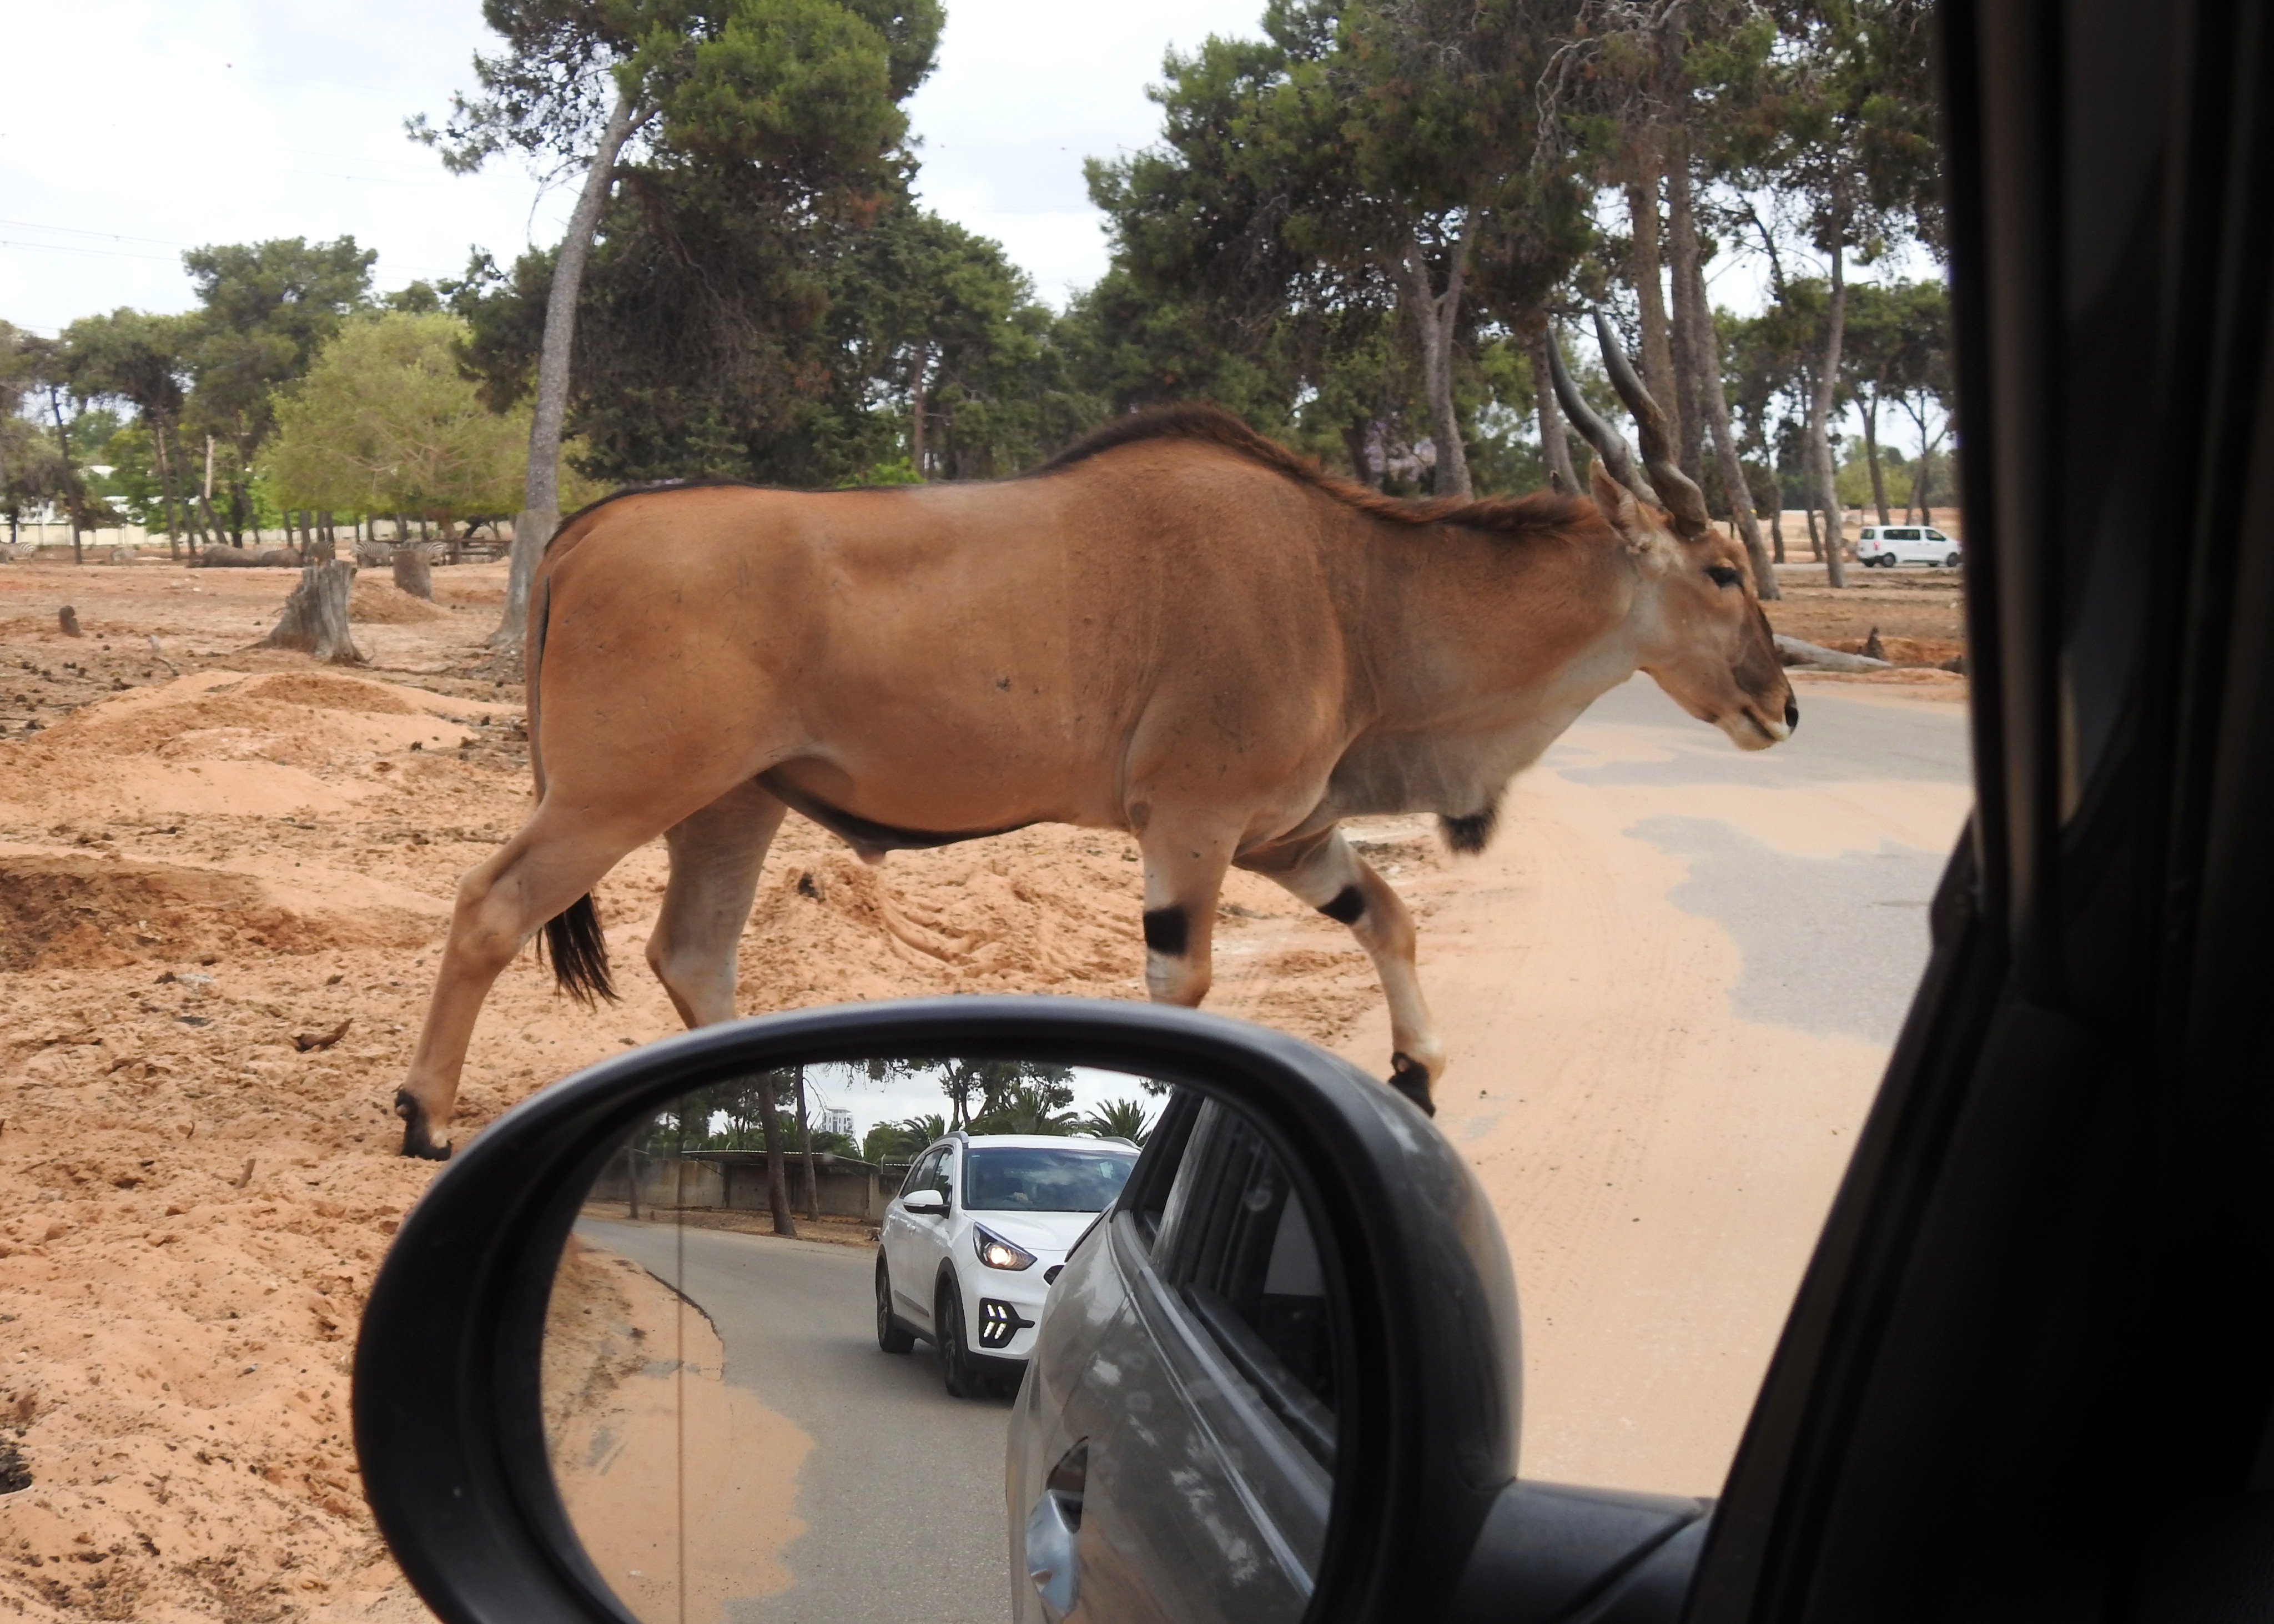 Typical safari moment